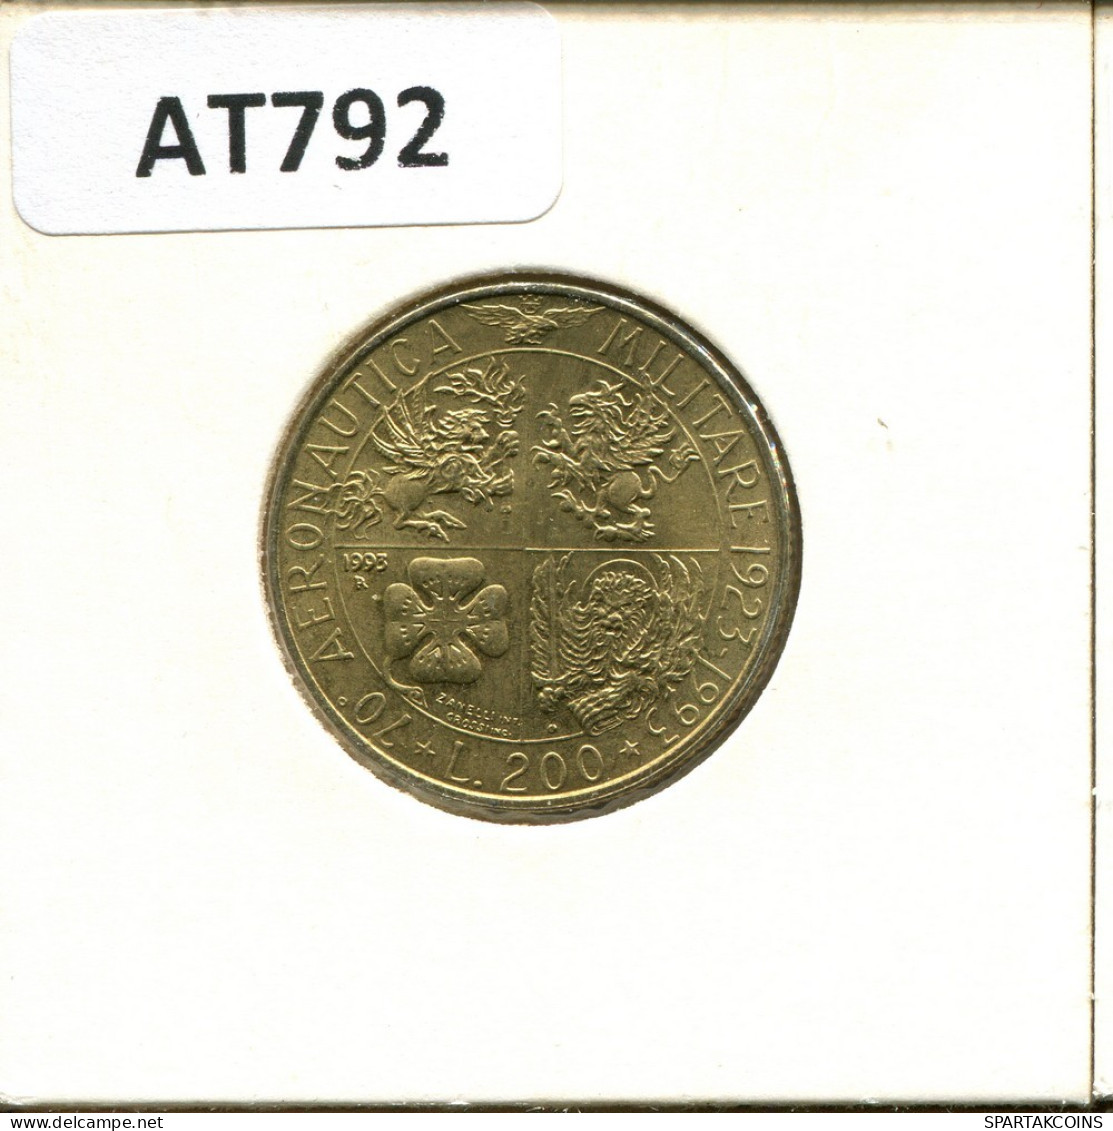 200 LIRE 1993 ITALY Coin #AT792.U.A - 200 Liras